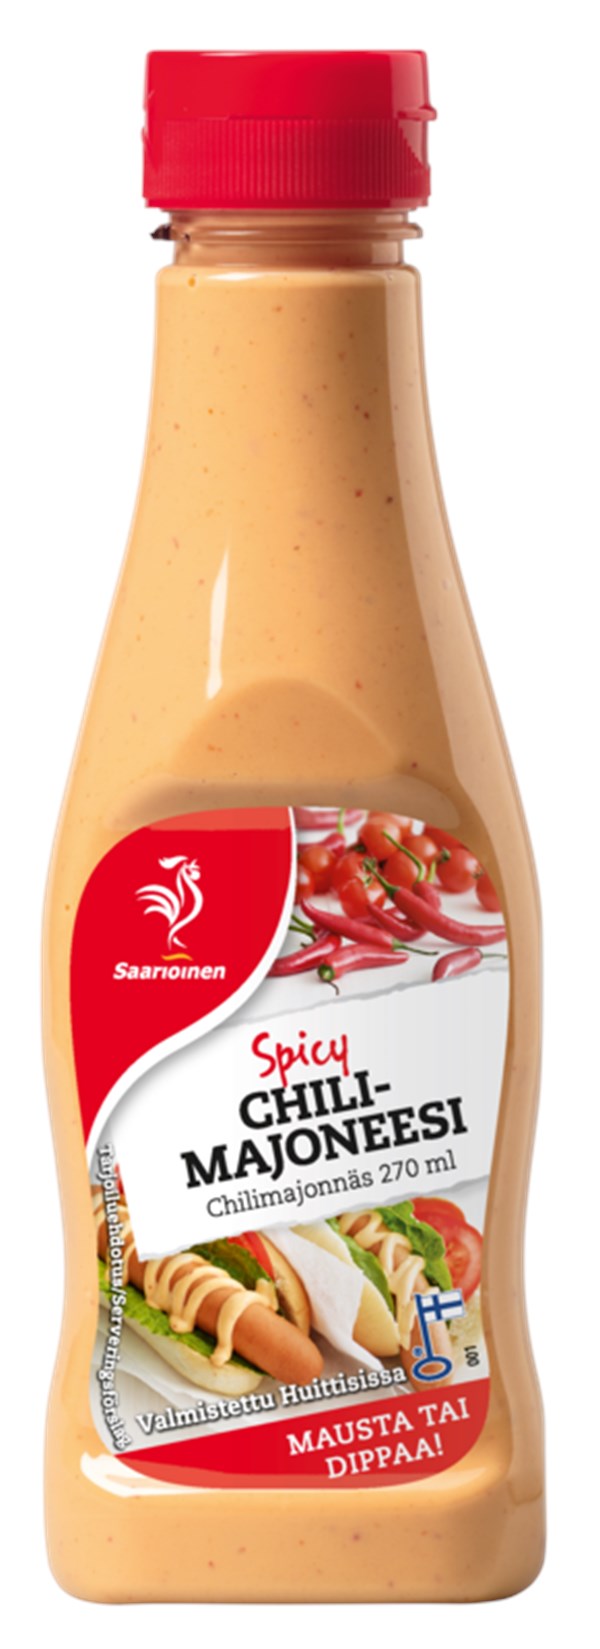 Spicy Chilimajoneesi 270 ml